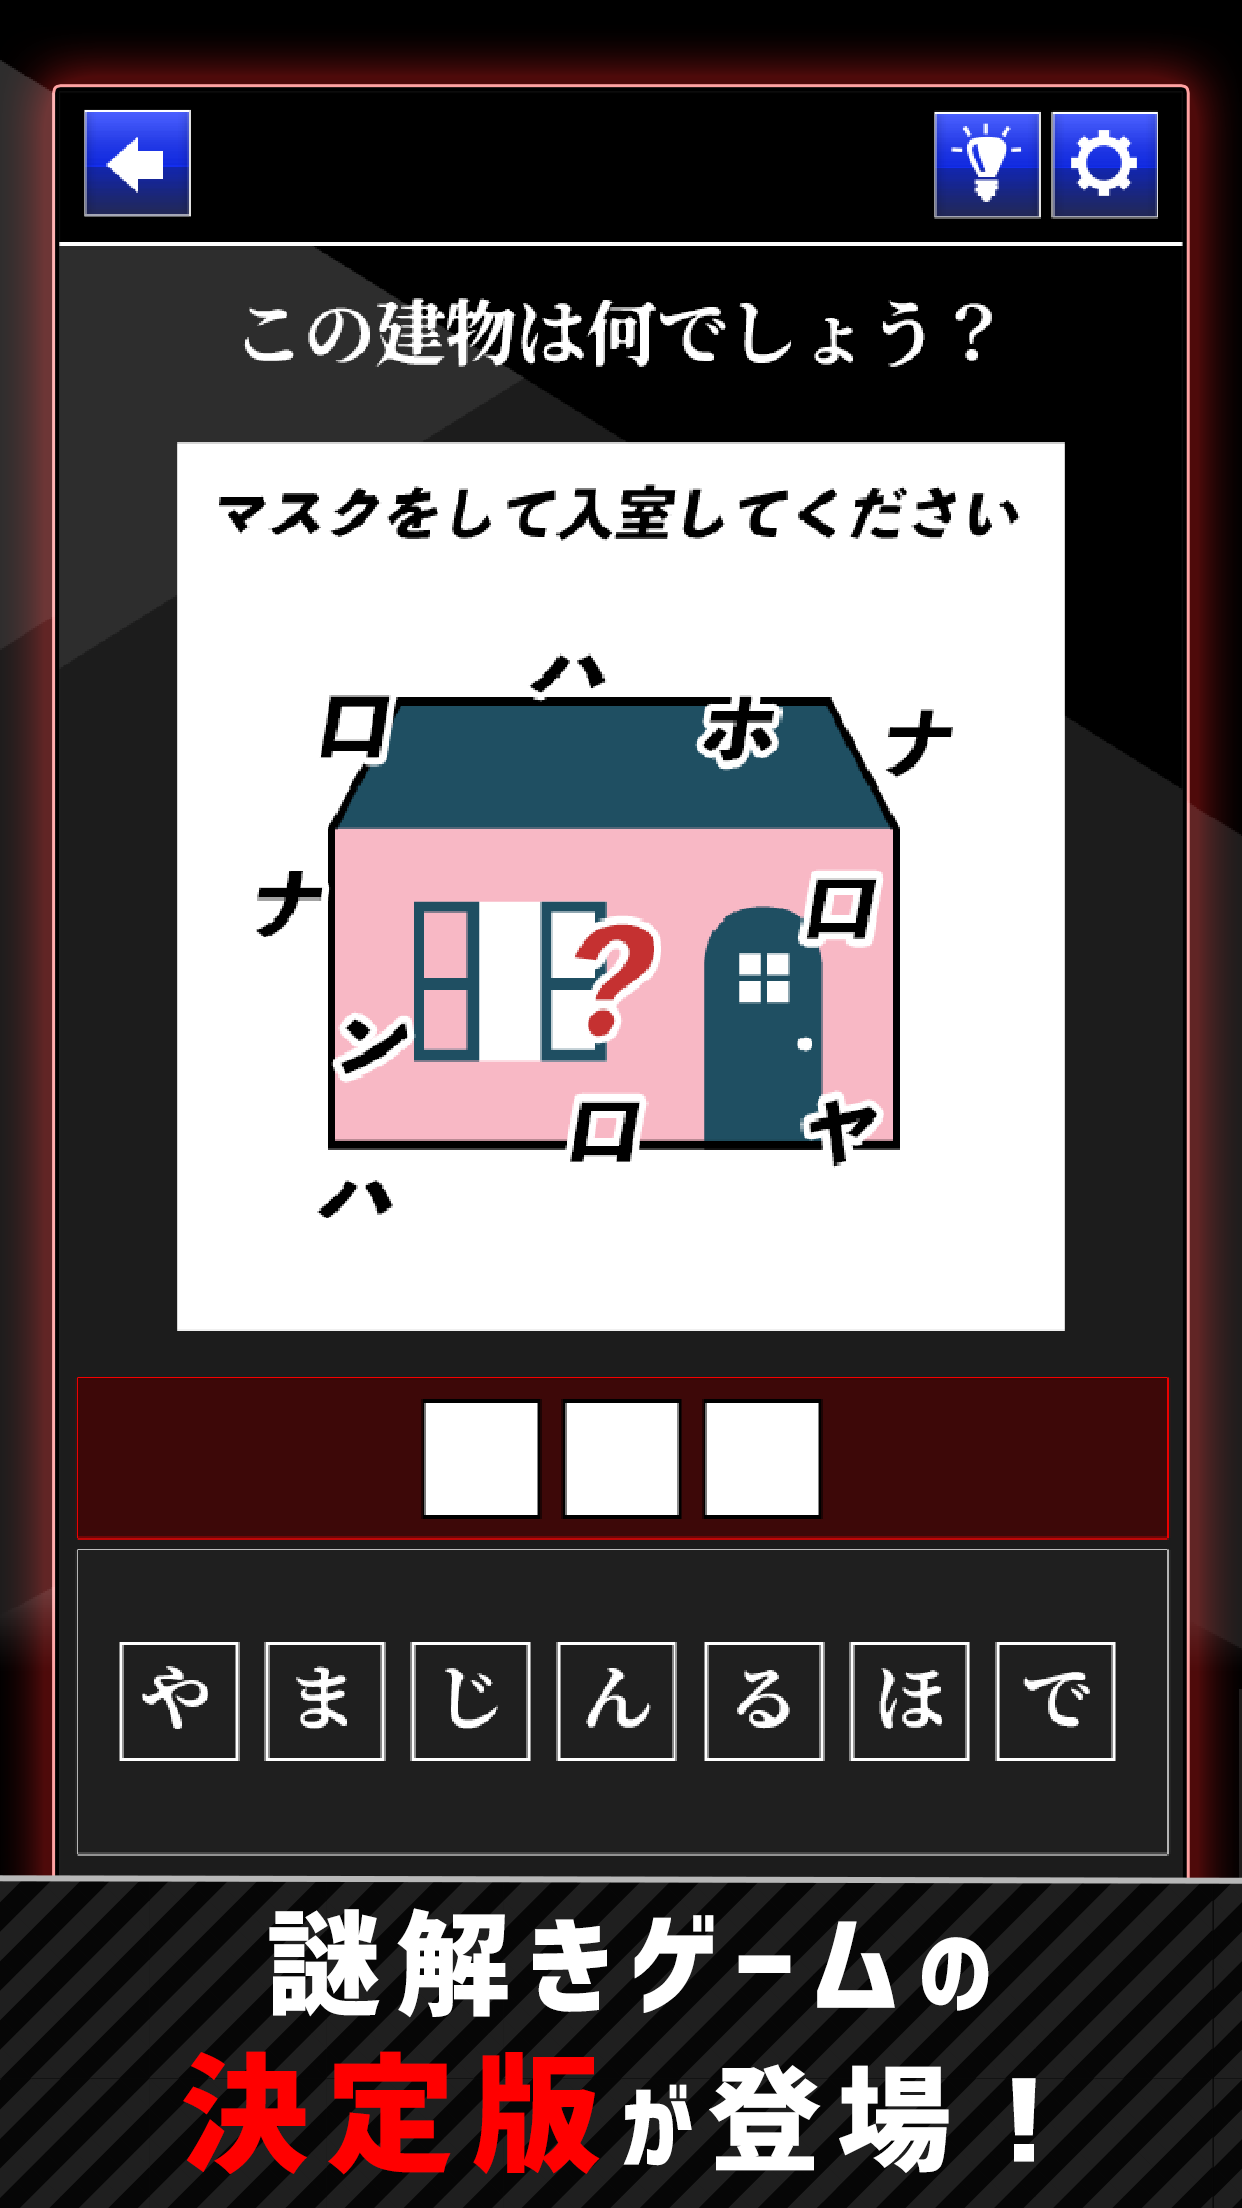 Screenshot 1 of ANG Mystery Solving Game 1.0.1